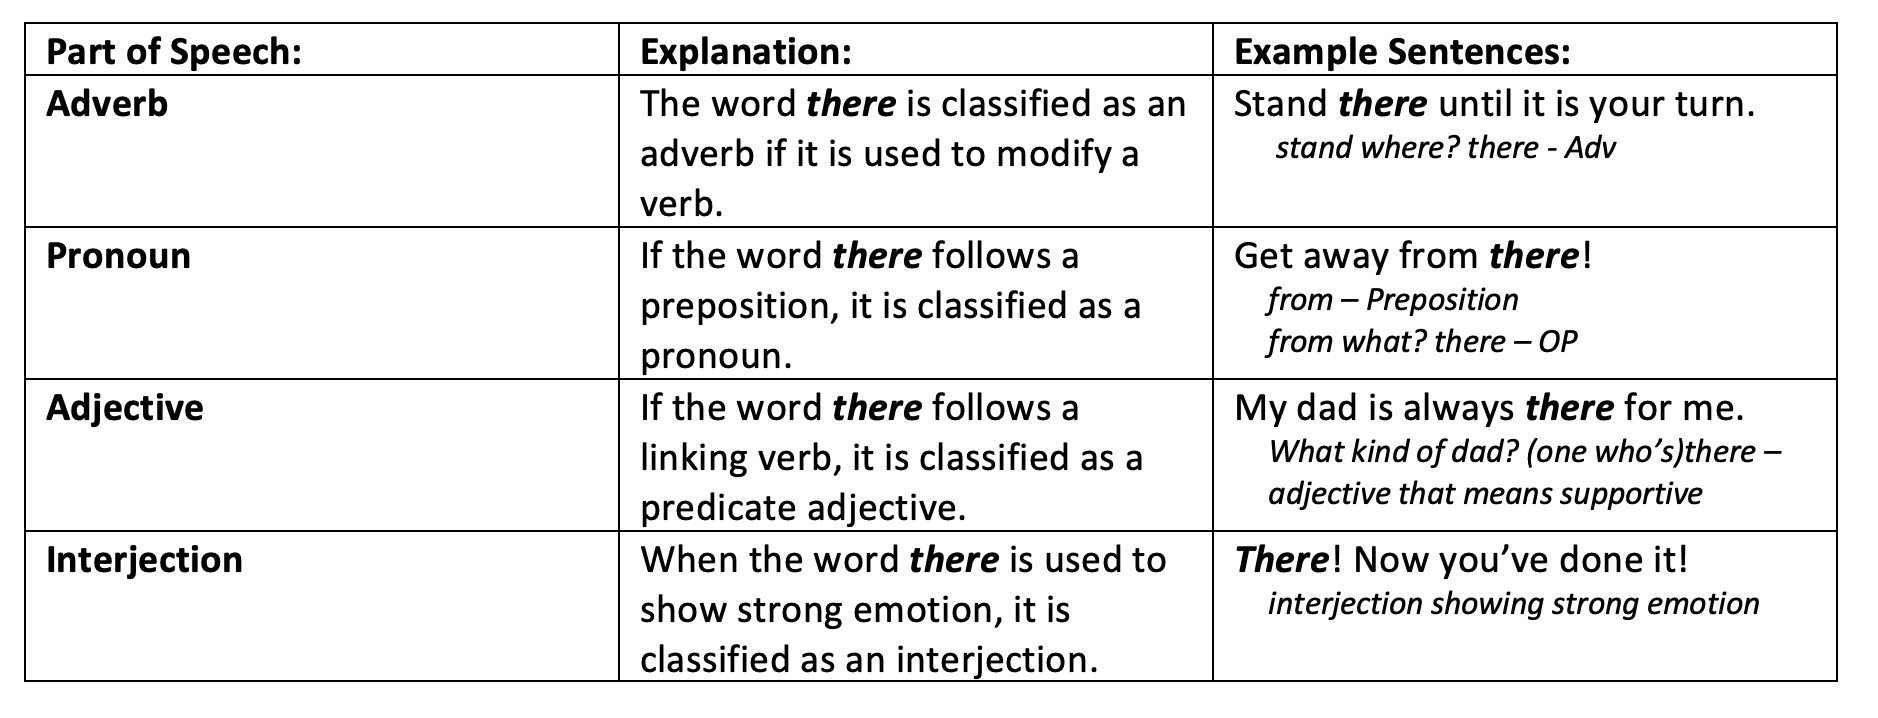 wordy sentences definition